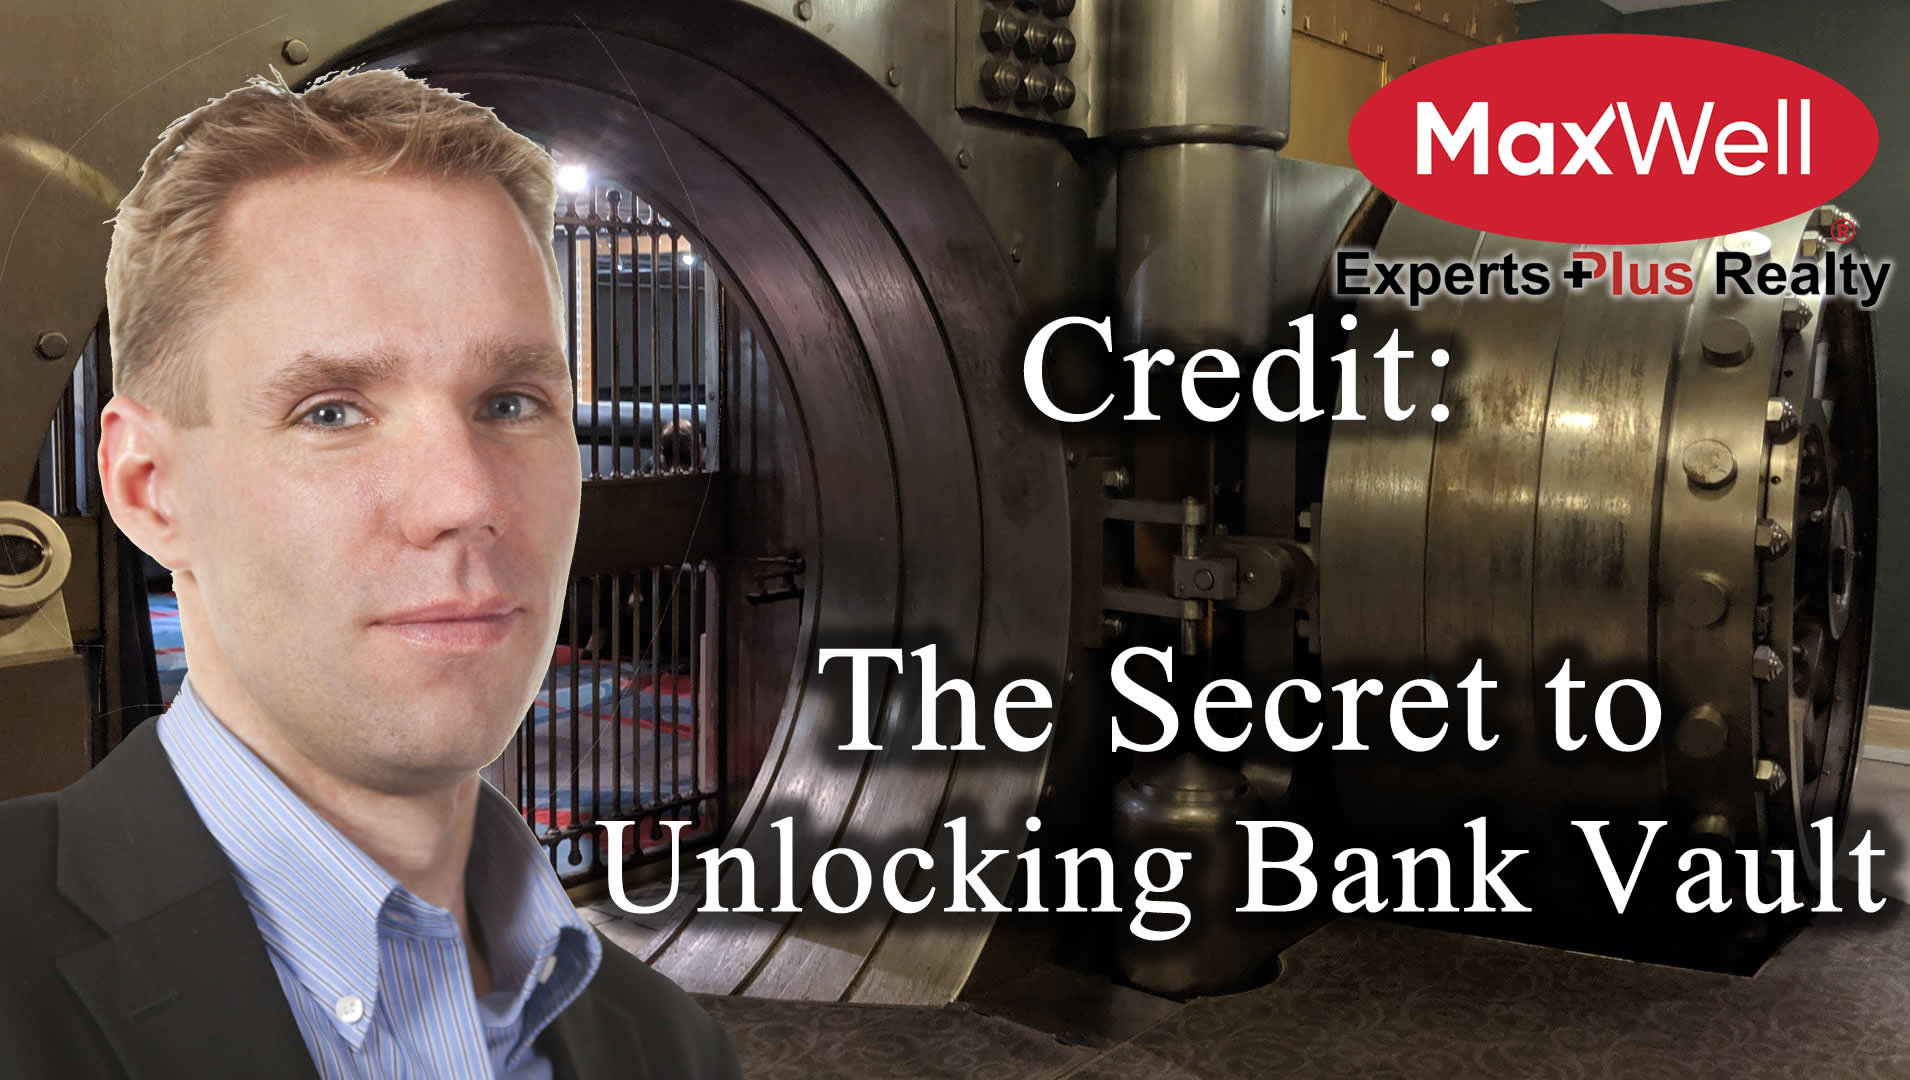 Credit: Secrets to Unlock the Bank's Vault